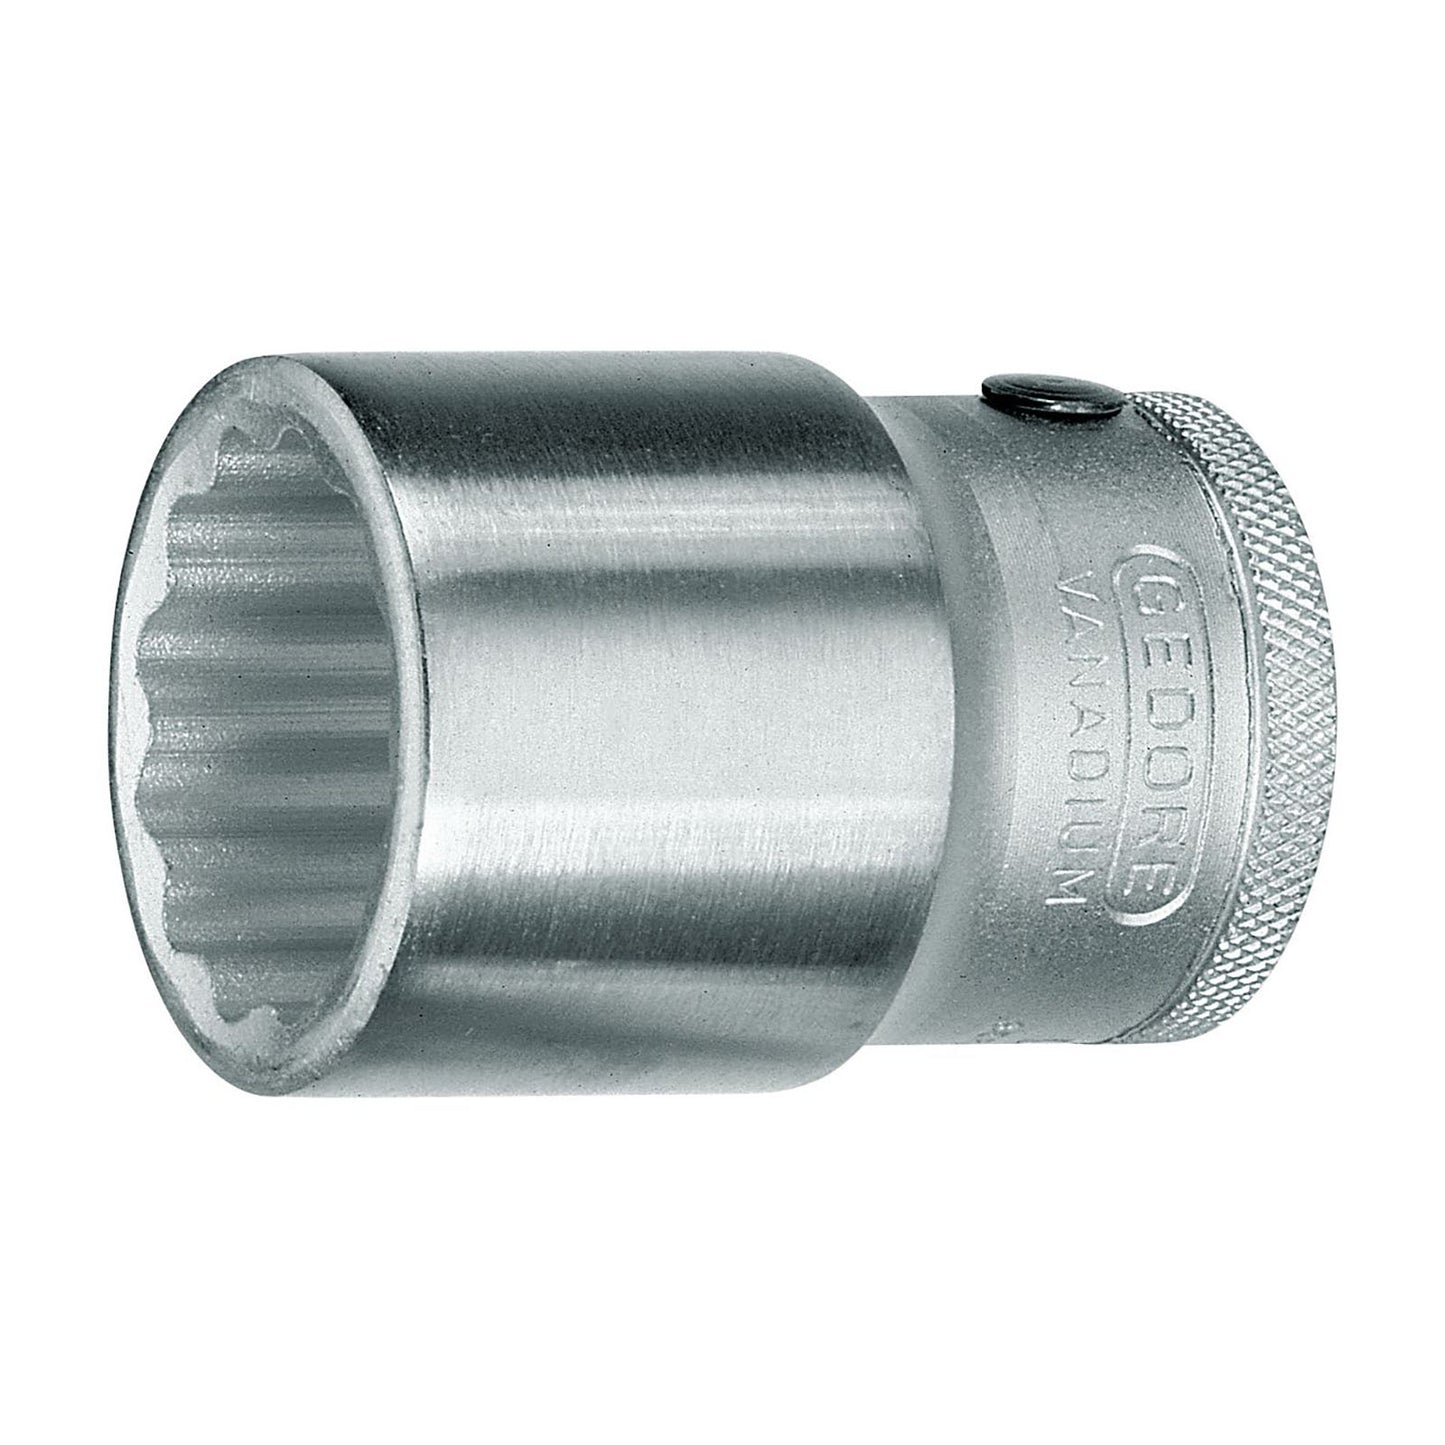 GEDORE D 32 50 - Vaso Unit Drive 3/4", 50 mm (6273210)